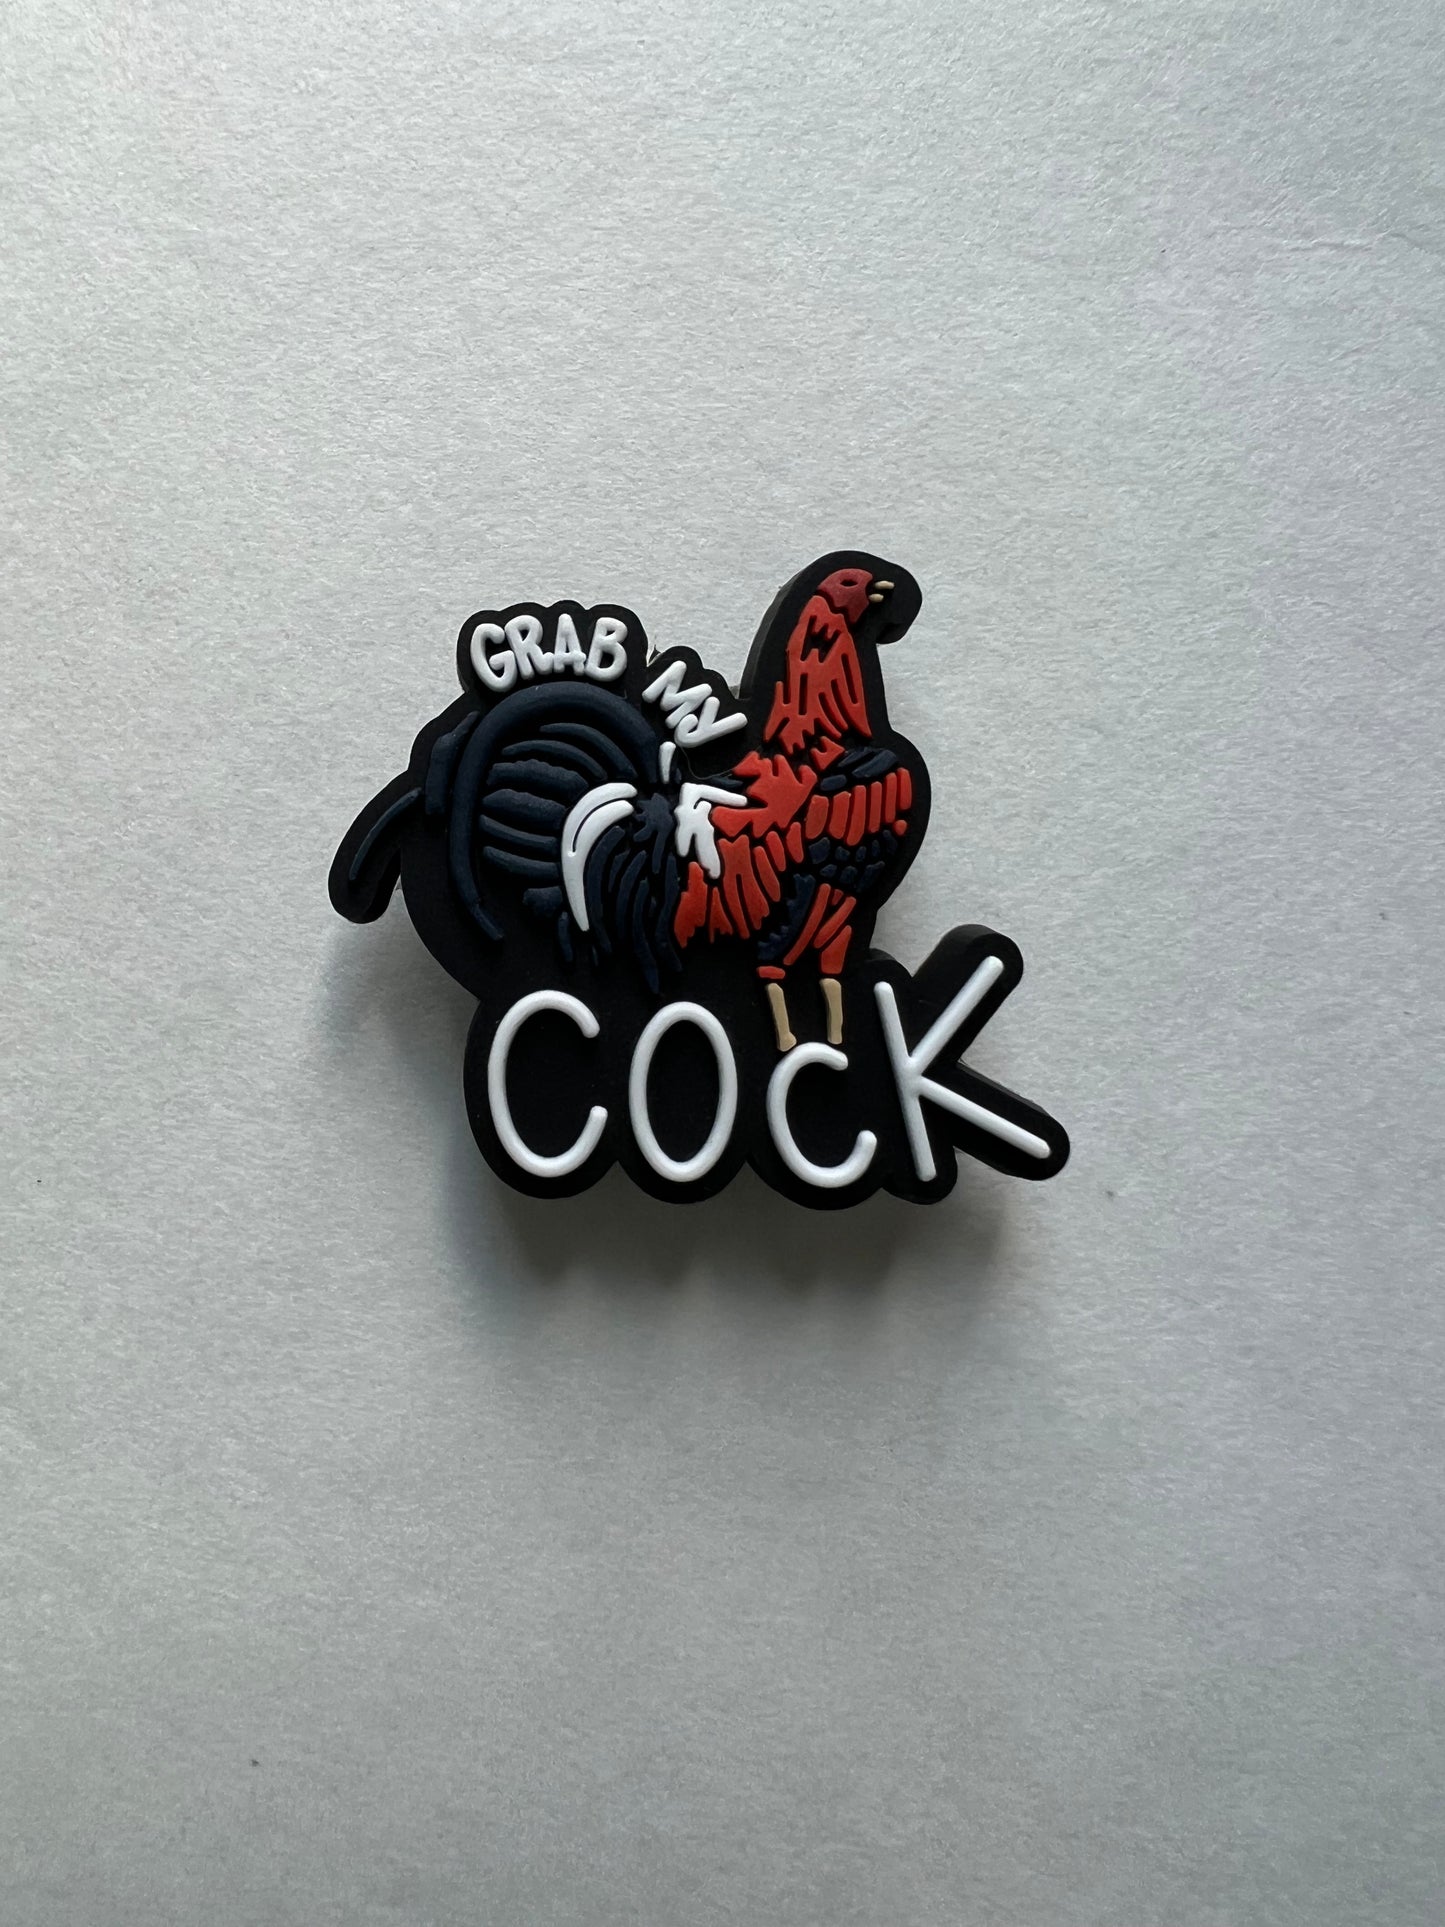 Grab my cock jibbitz